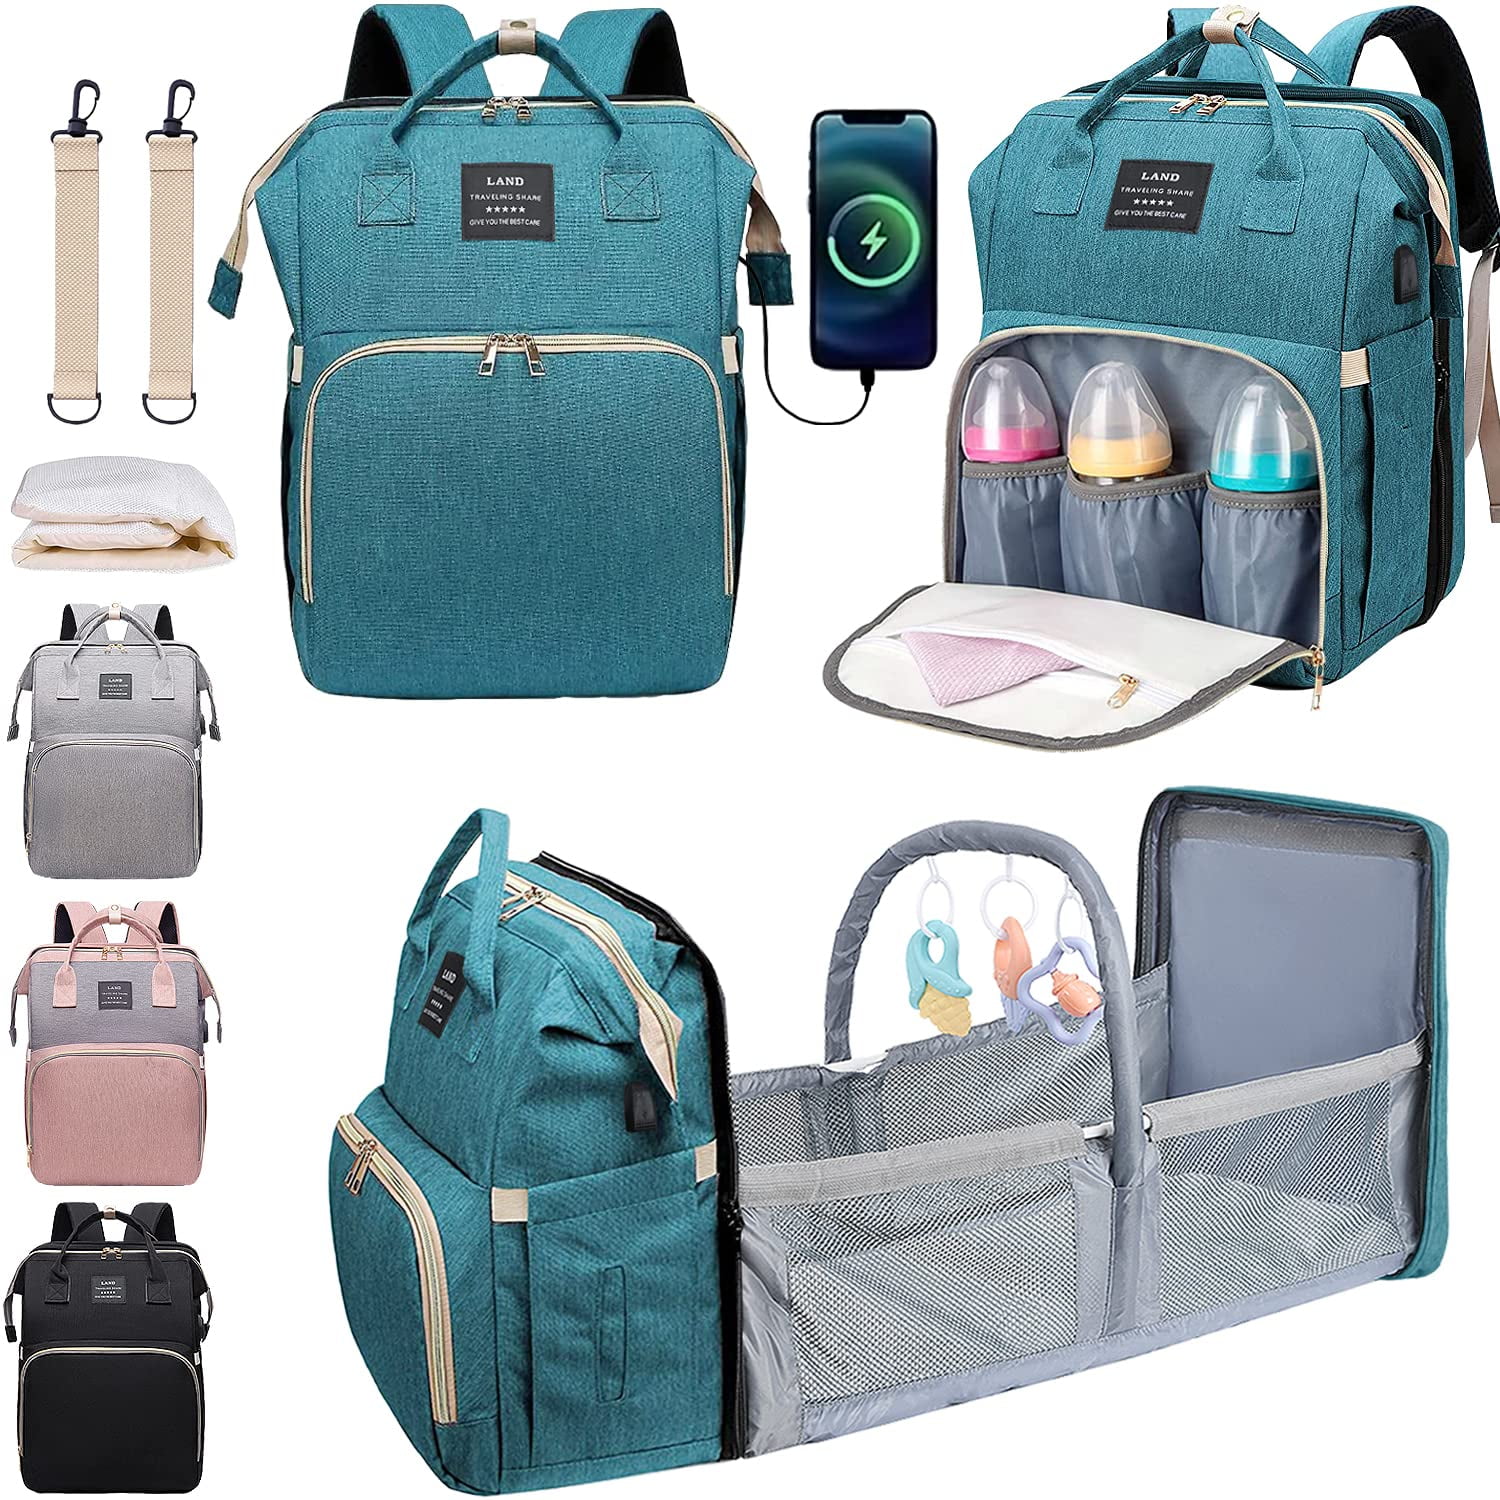 backpack baby bag